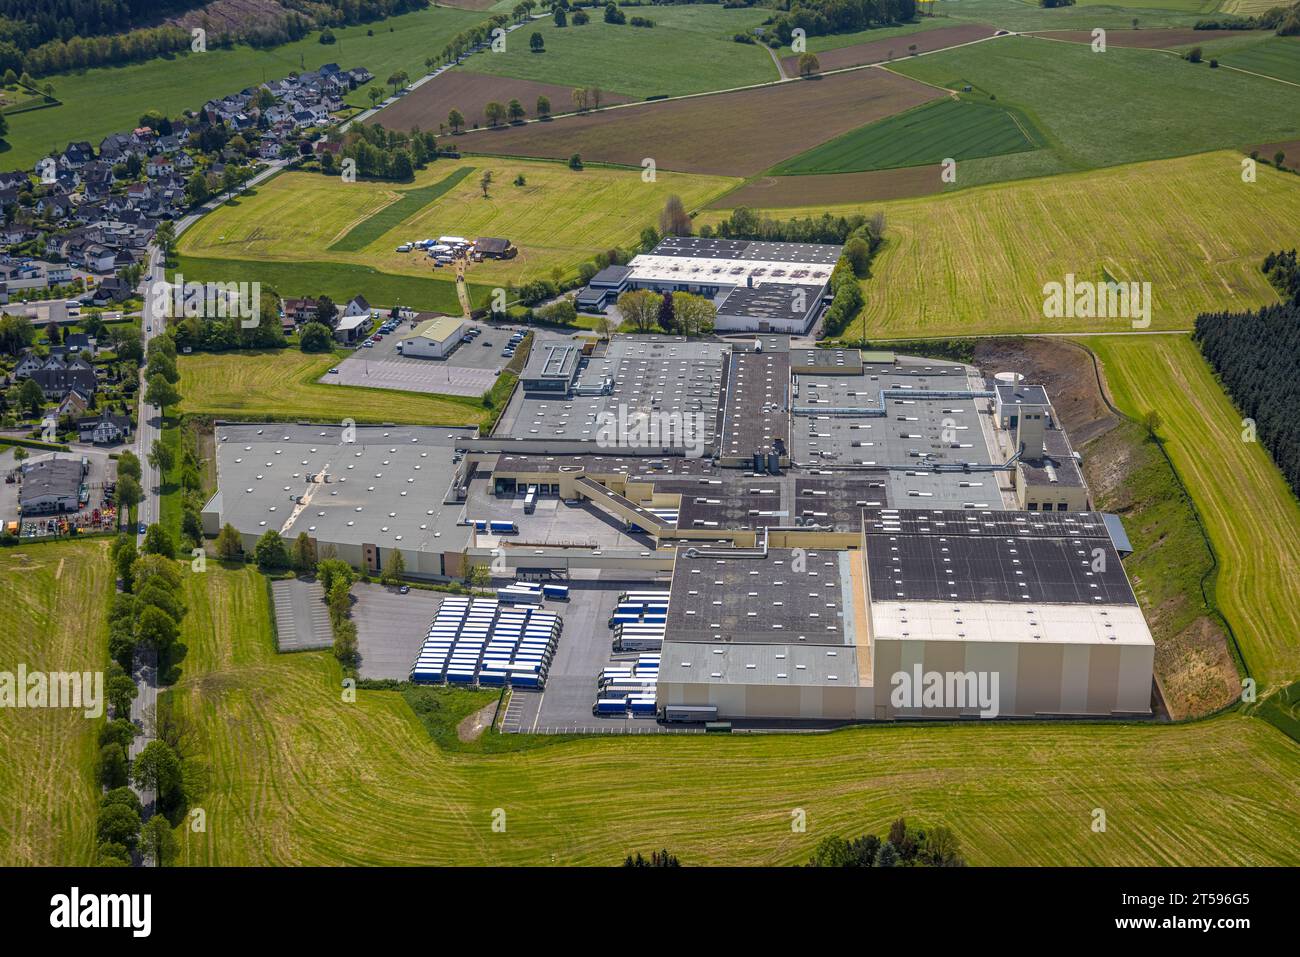 Aerial view, Tillmann Papier- und Wellpappenfabrik, Stockum, Sundern, Sauerland, North Rhine-Westphalia, Germany, DE, Europe, Commercial enterprises, Stock Photo